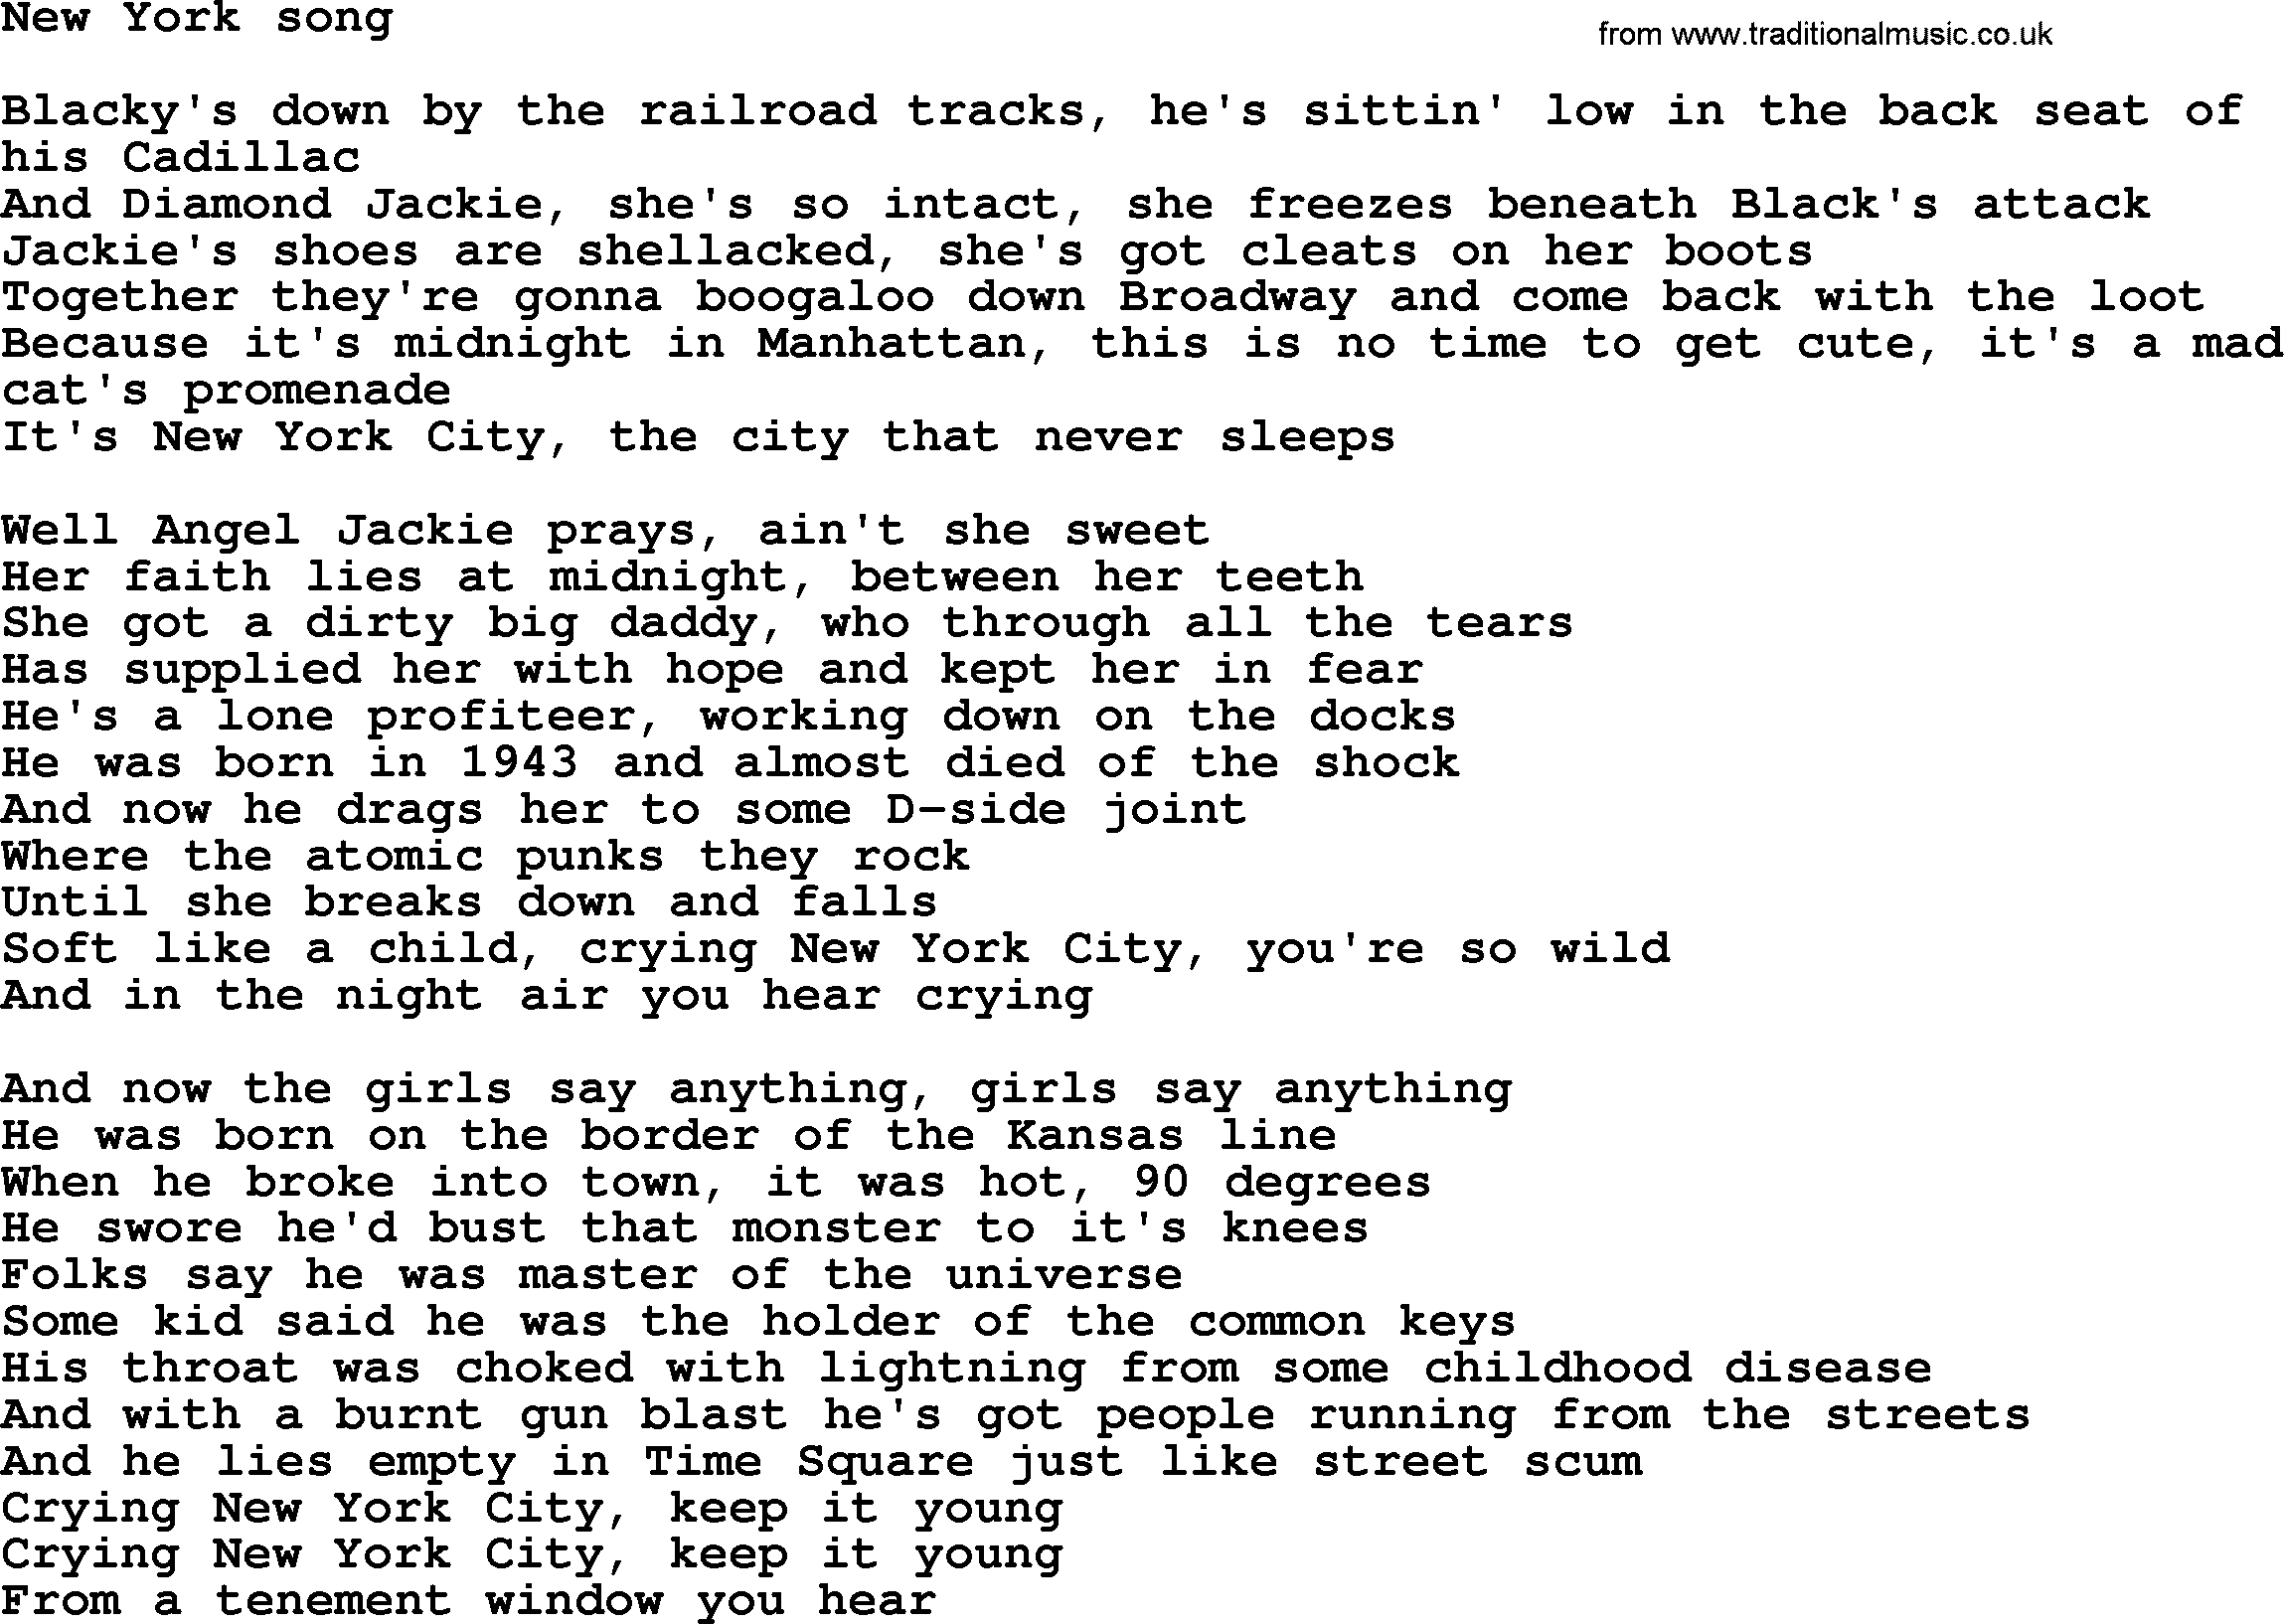 Bruce Springsteen song: New York Song lyrics